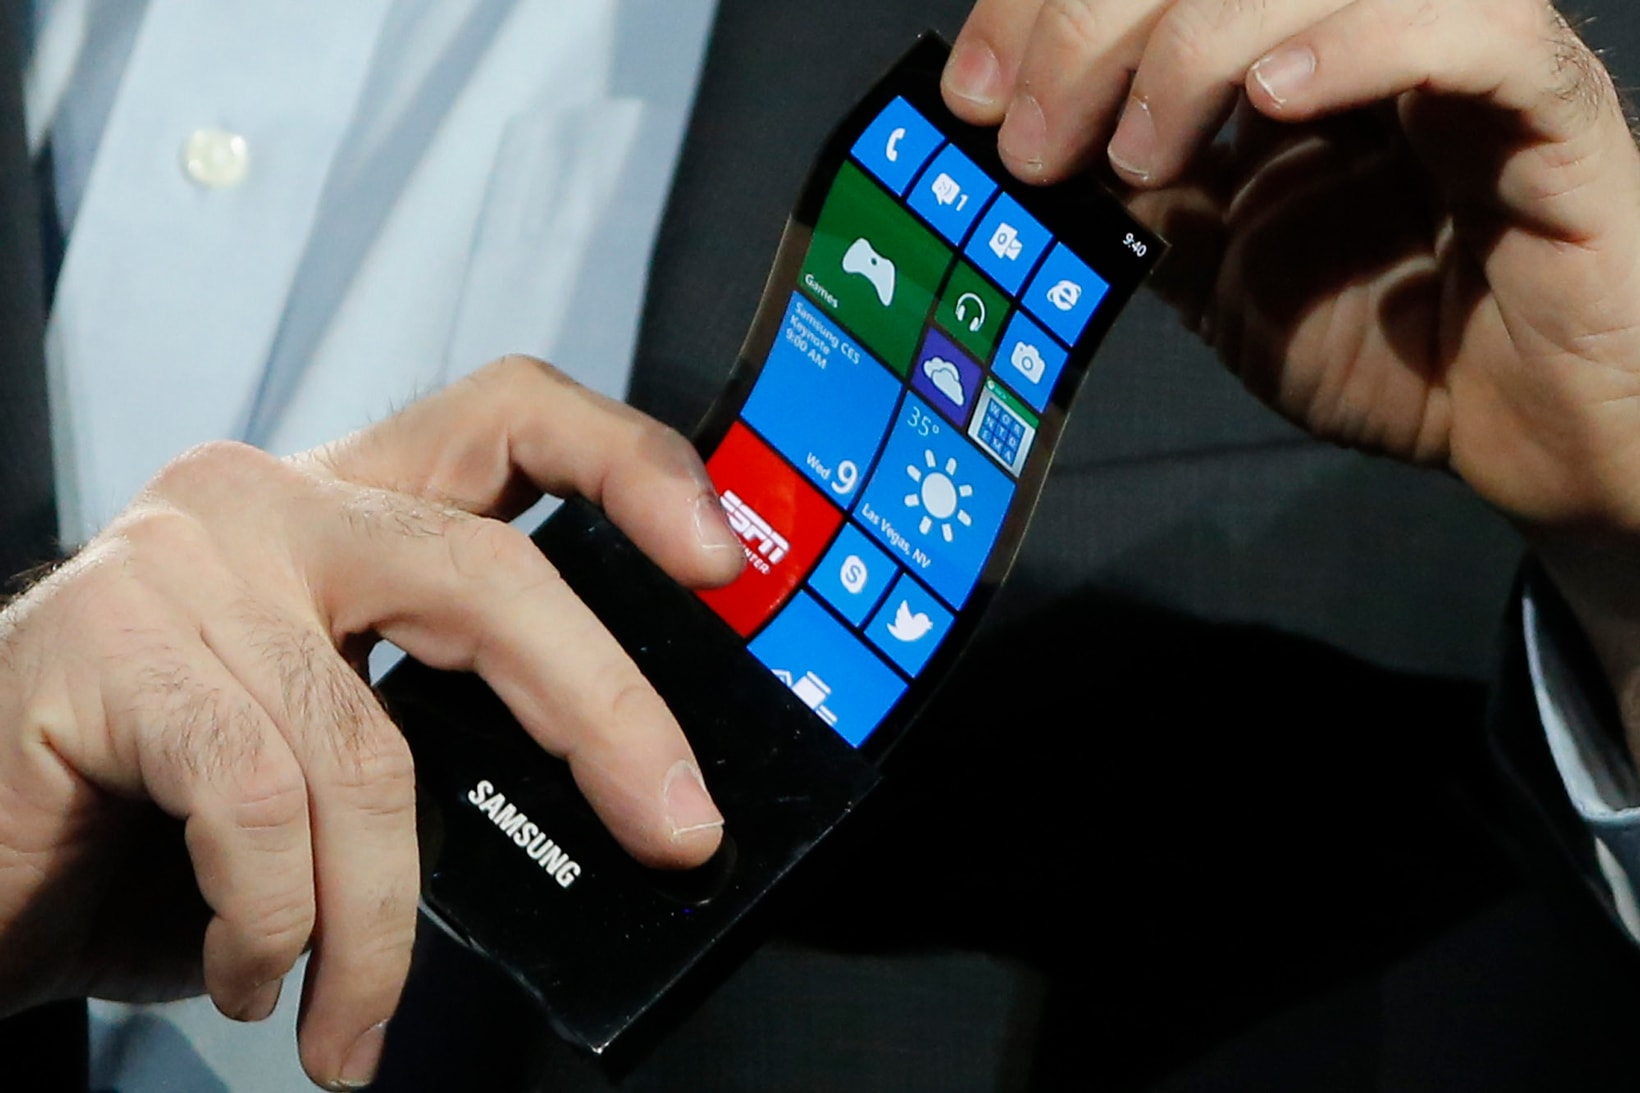 Samsung 2016 Foldable Smartphone Patent